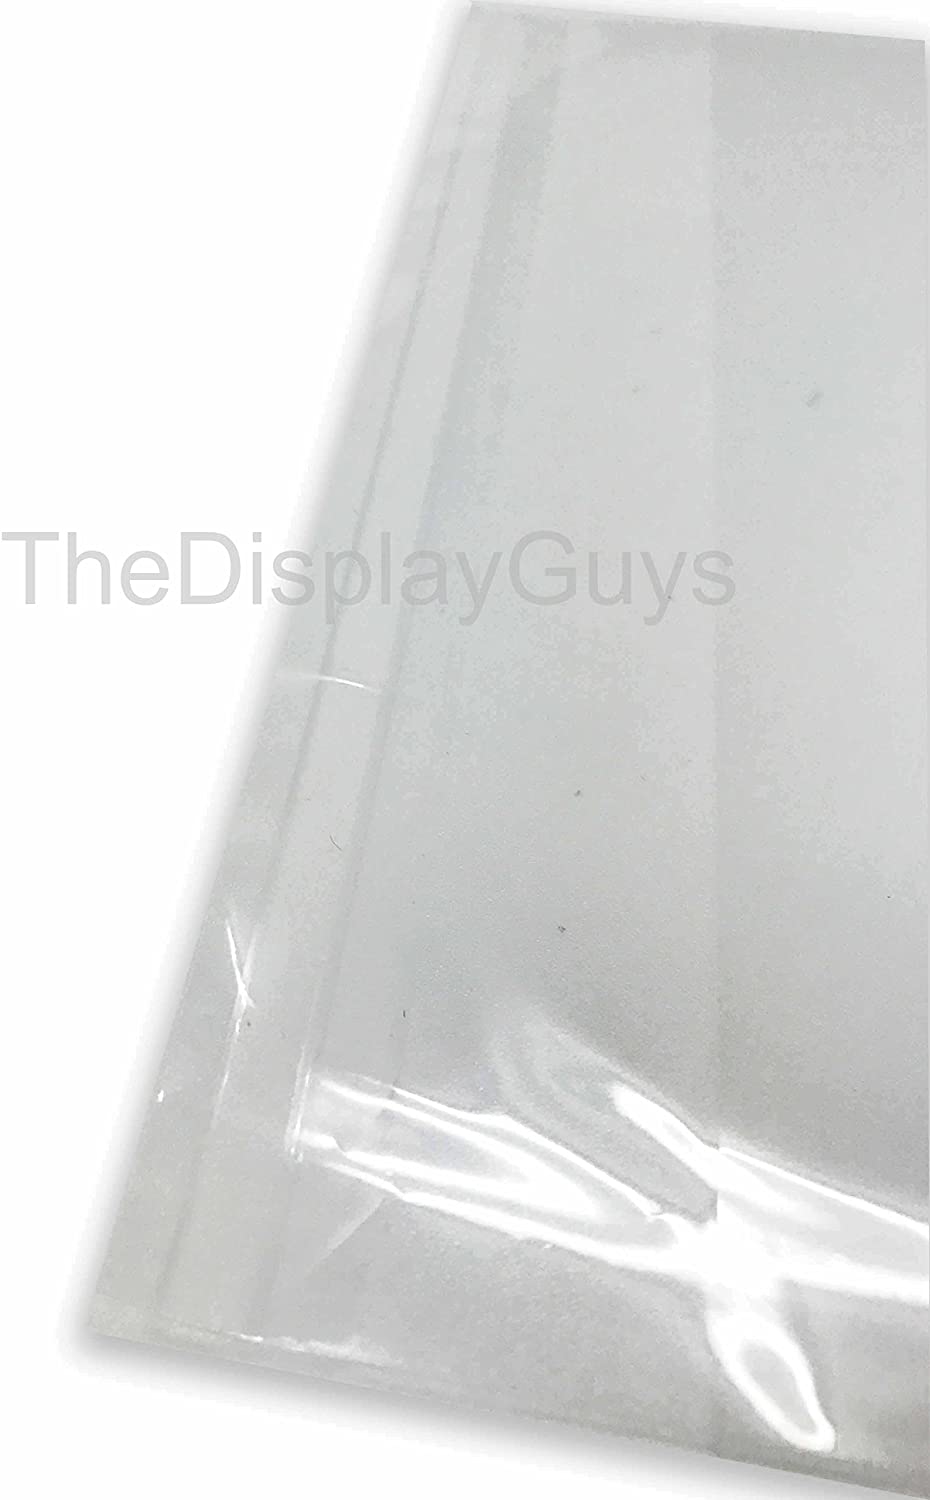 Blue Plexiglass Mirror Sheets 4x6 Foot Acrylic Panel Adhesive